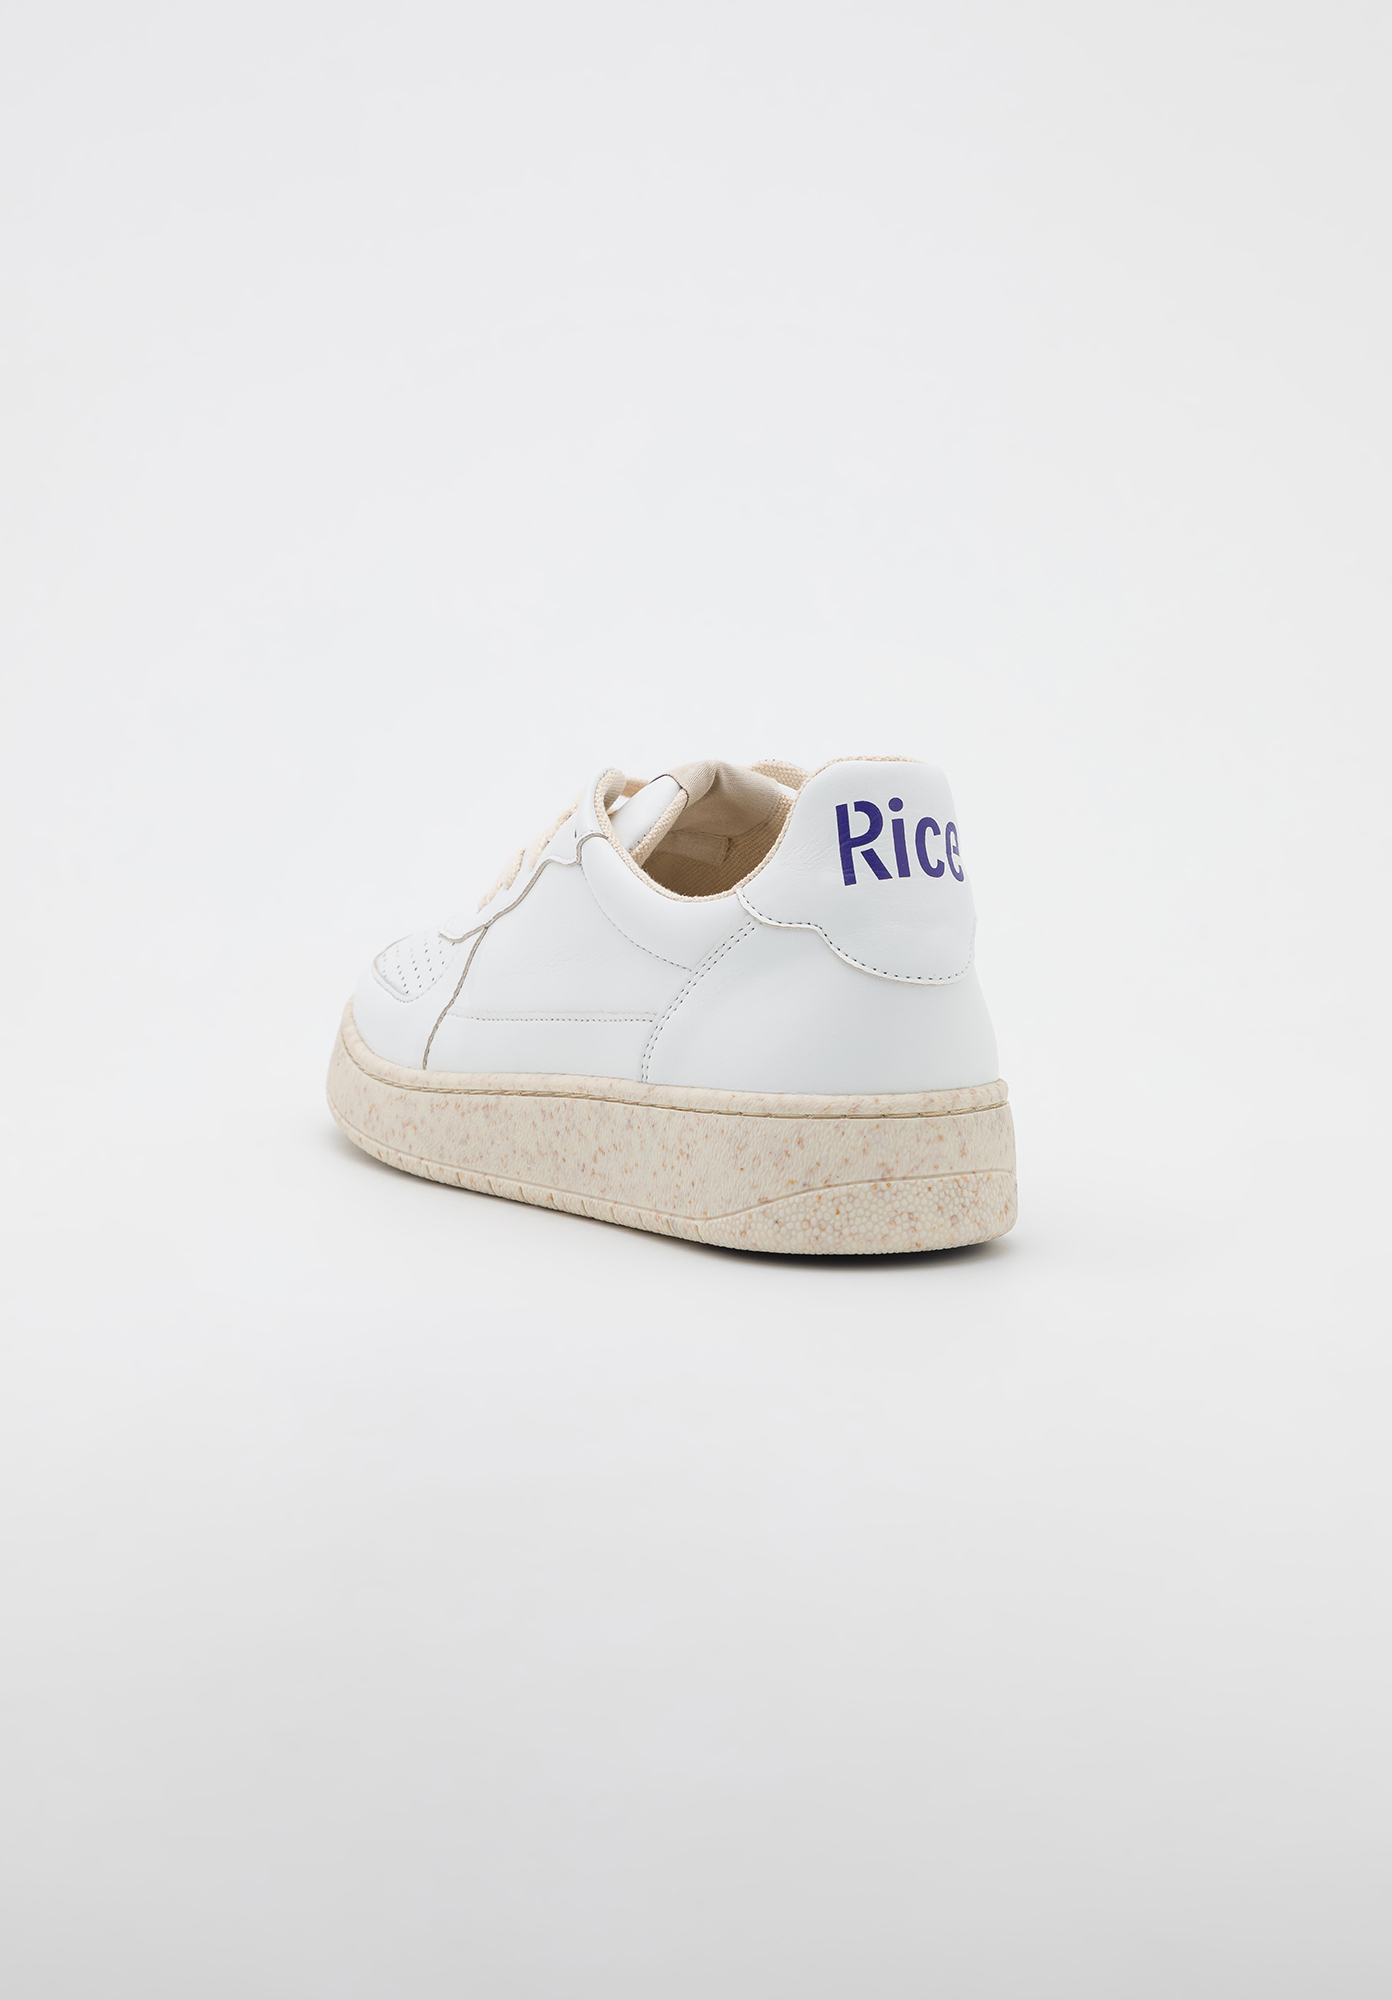 RICE Sneaker Open21 white 39